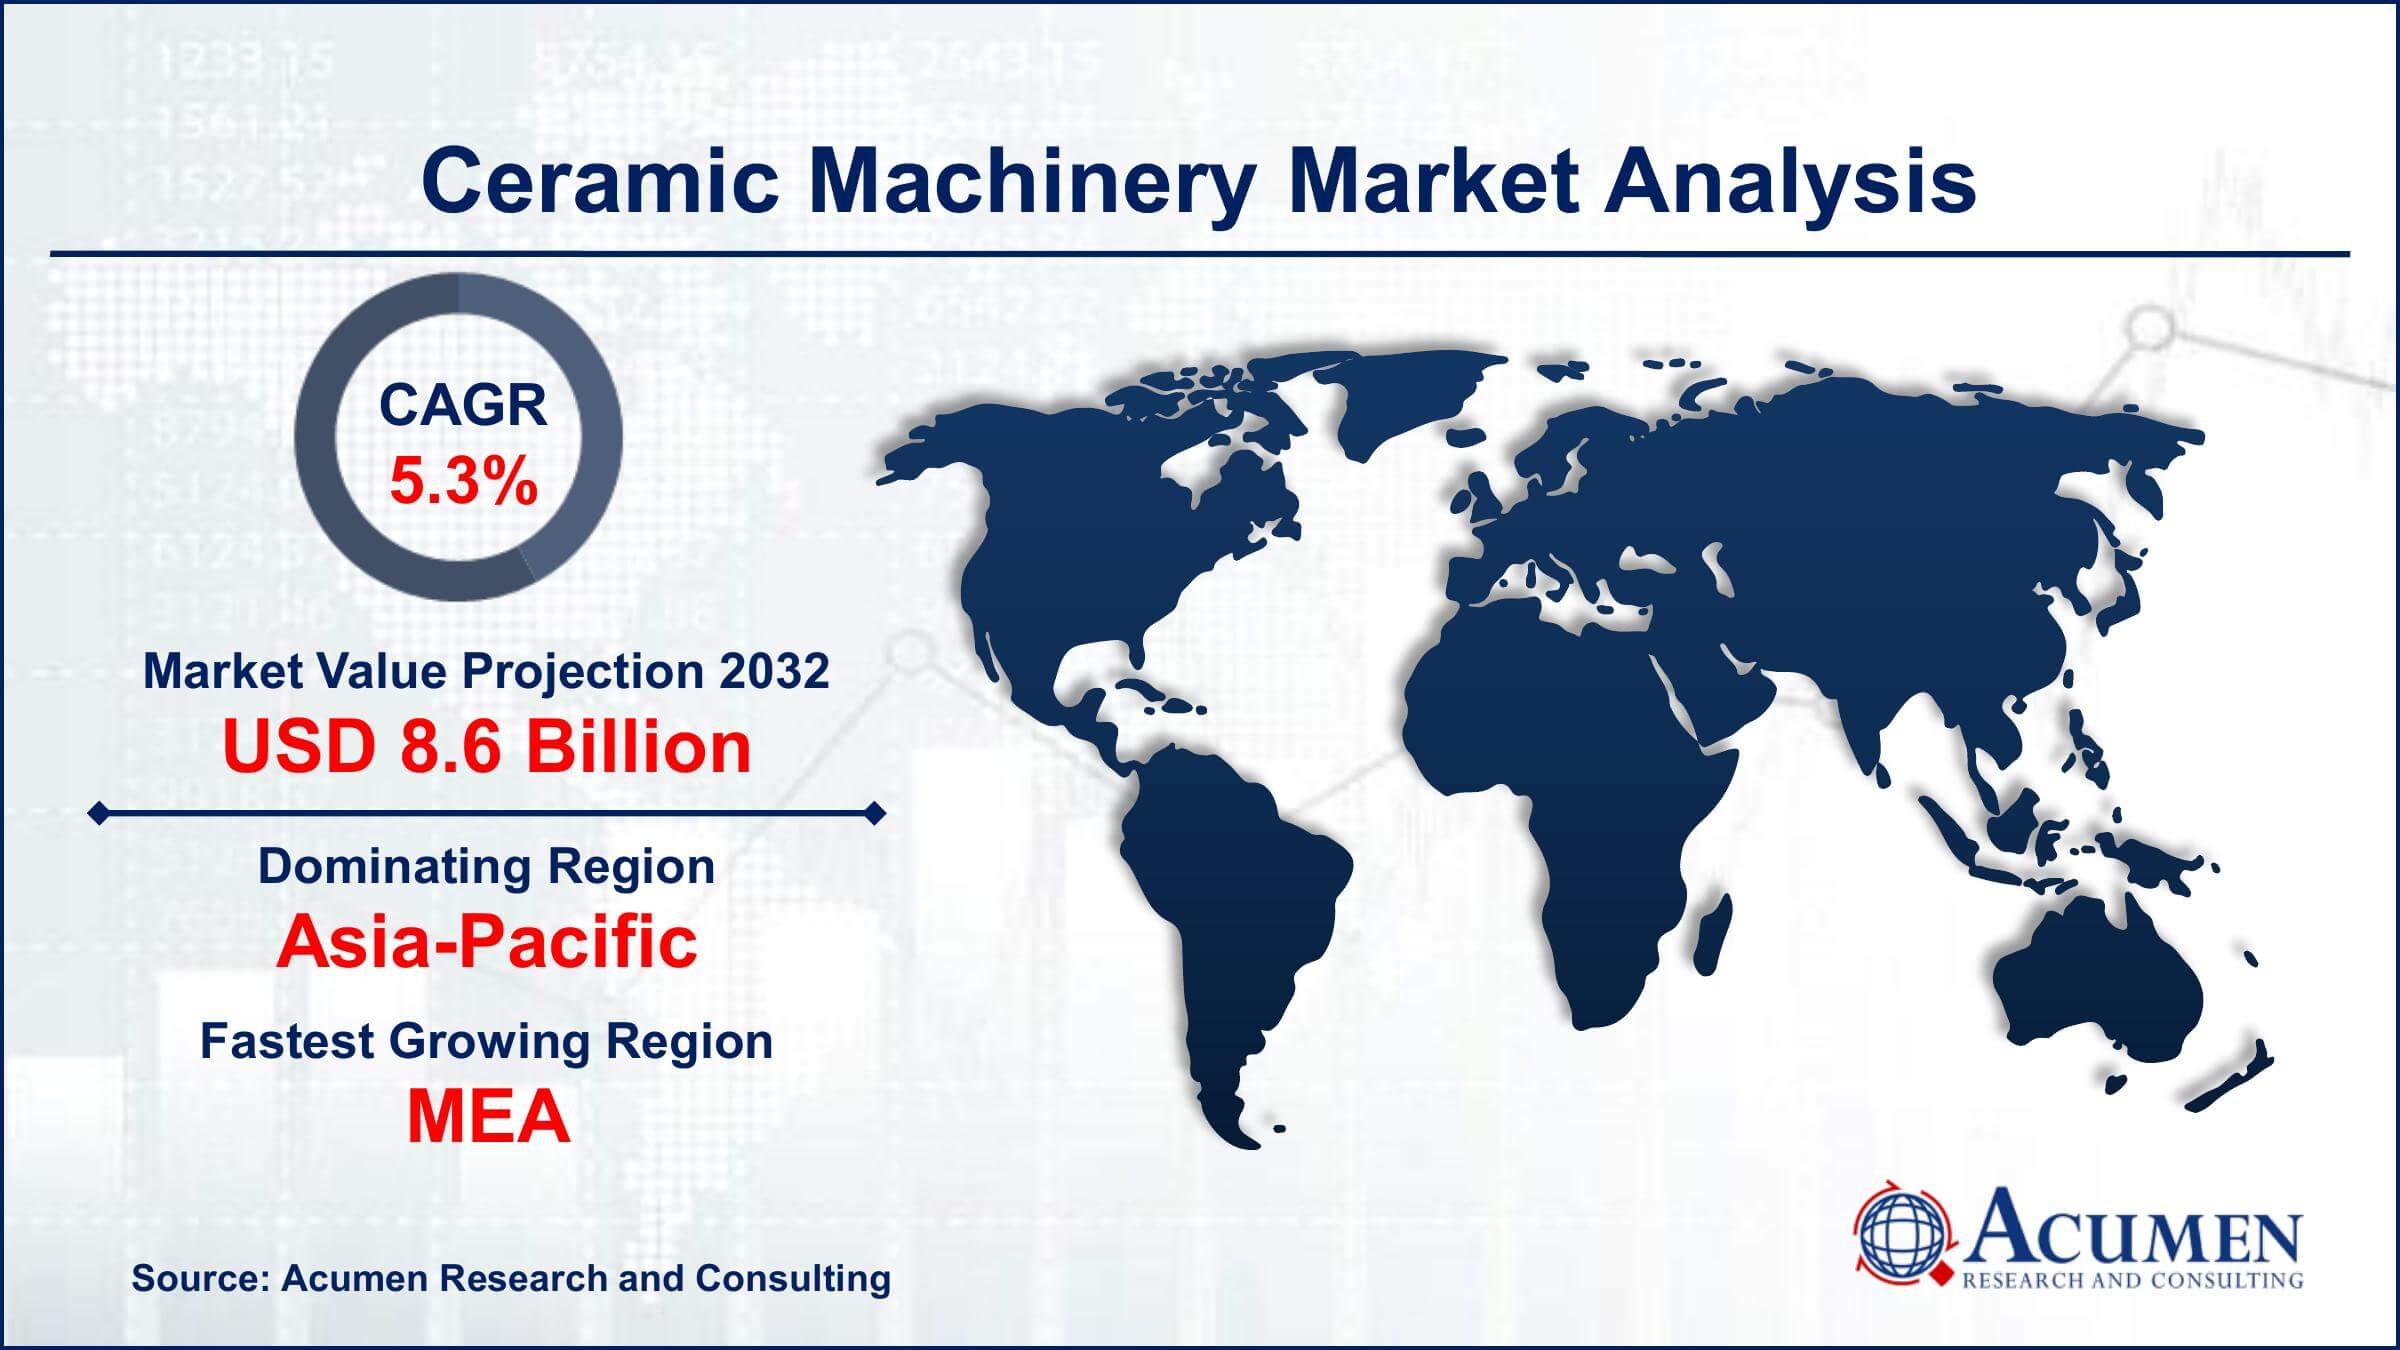 Global Ceramic Machinery Market Trends